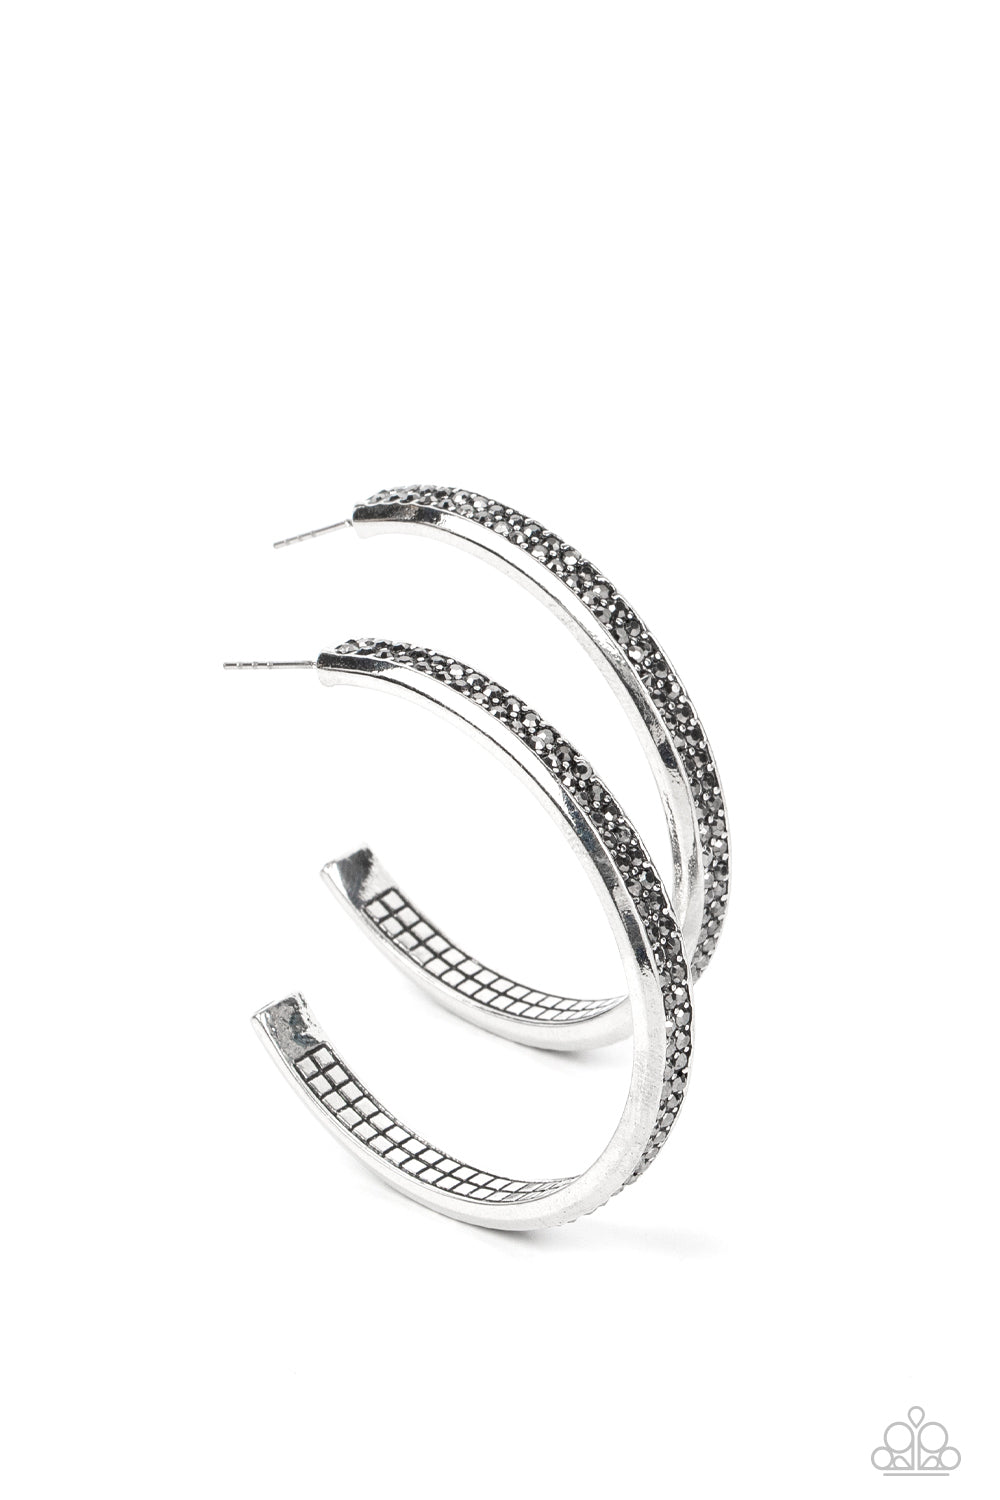 five-dollar-jewelry-flash-freeze-silver-earrings-paparazzi-accessories